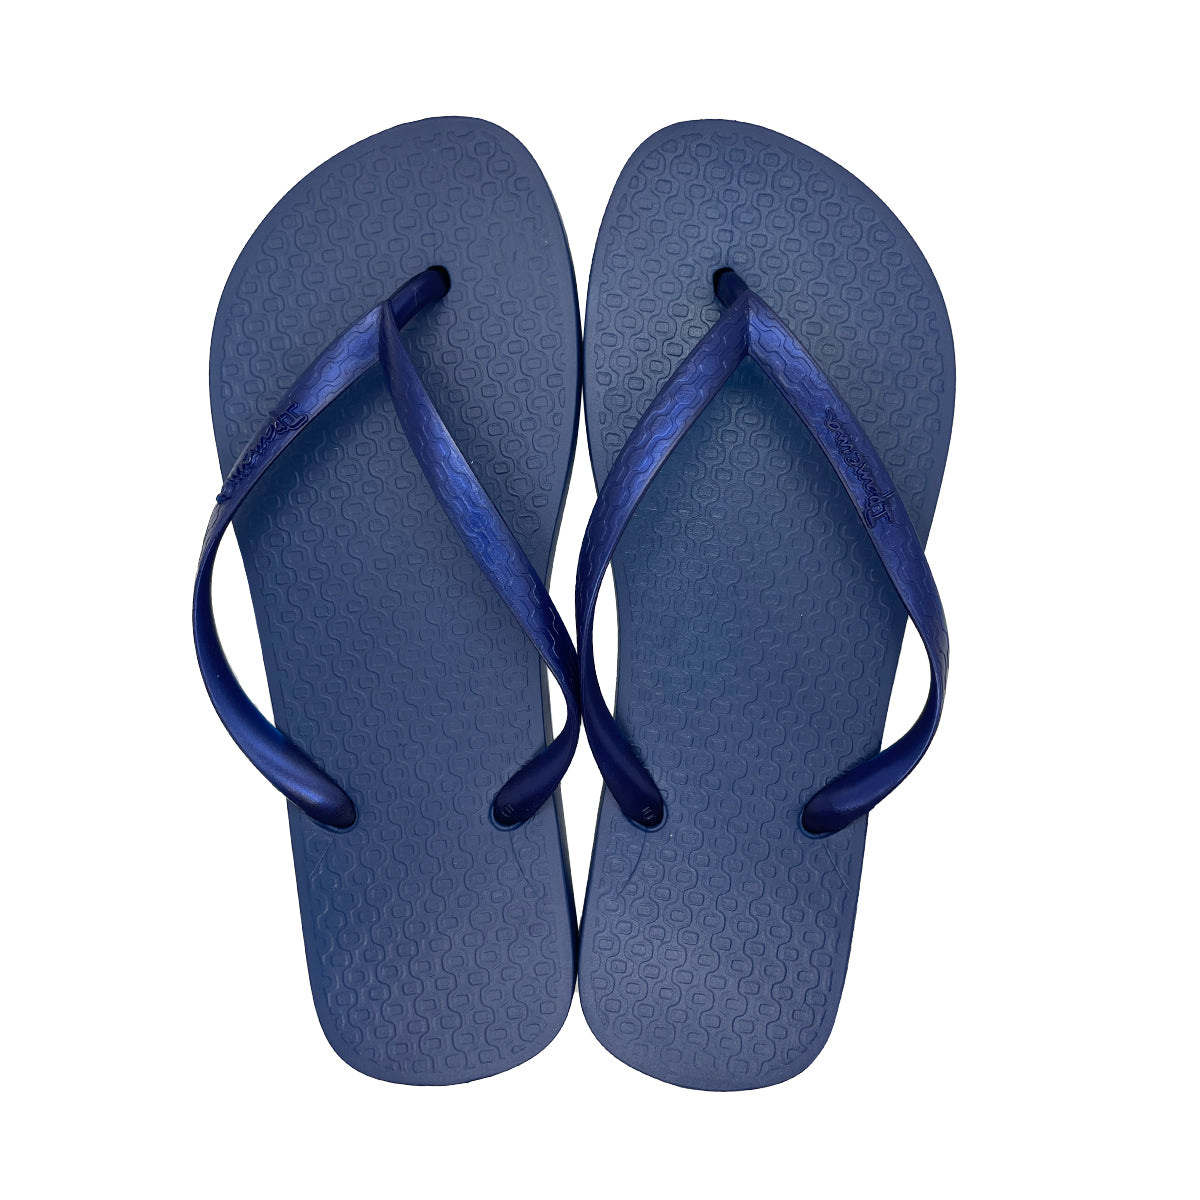 Ipanema Flip-Flops For Women, Navy Blue